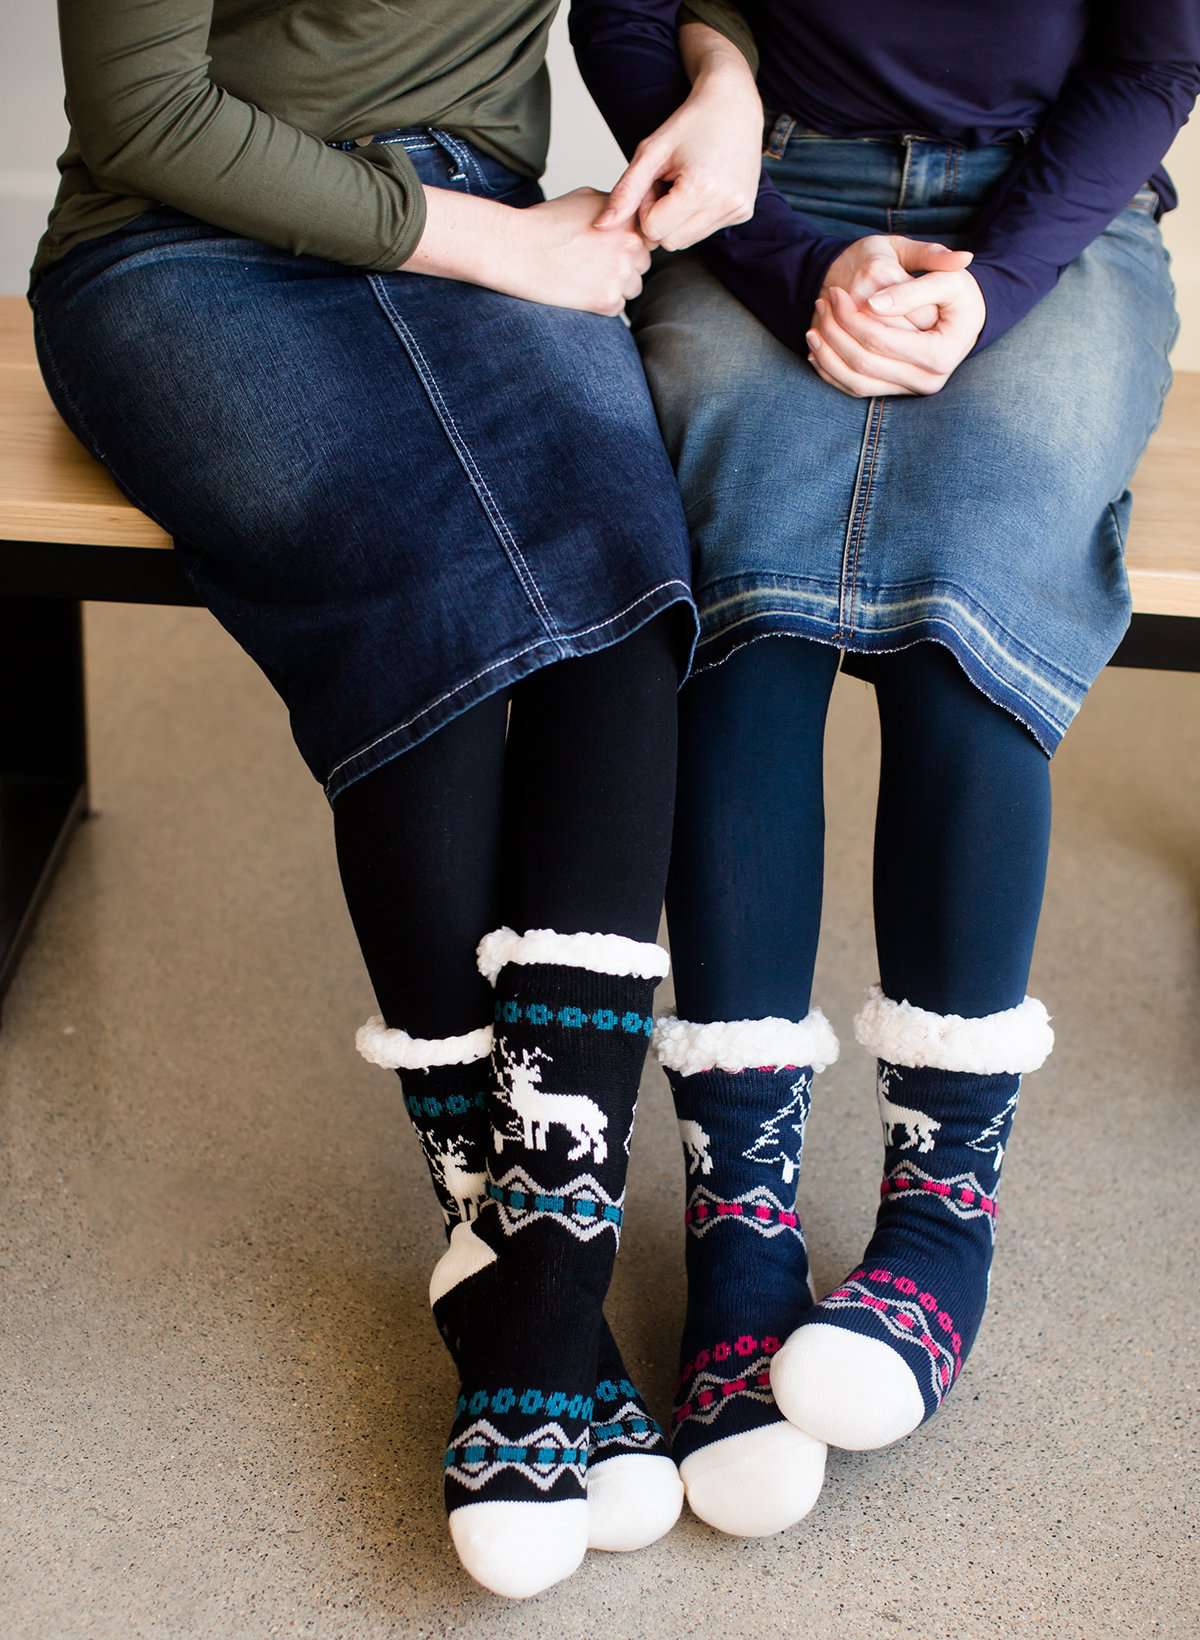 Reindeer and Pine Tree Christmas scene slipper socks in gray, navy and black.